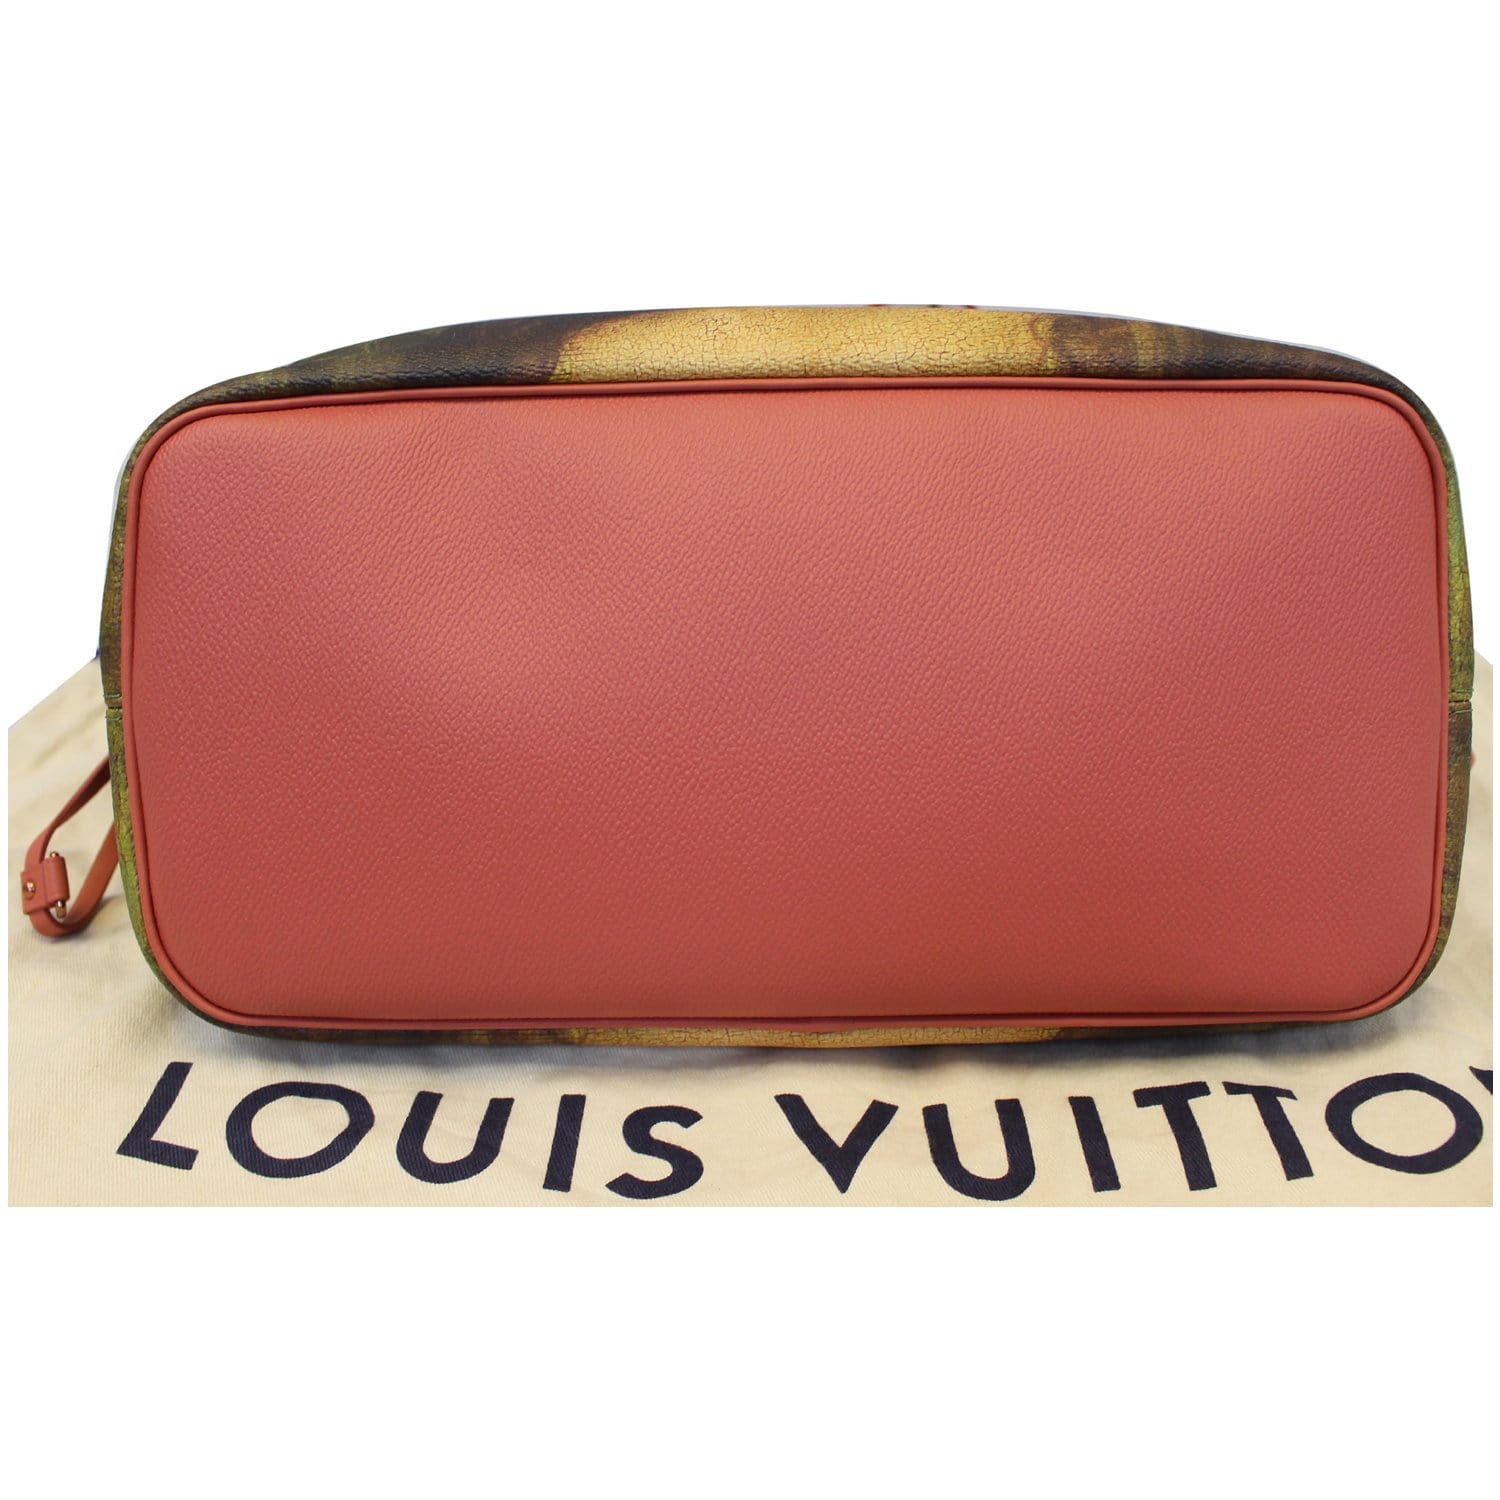 Louis Vuitton Limited Edition Coated Canvas Jeff Koons DaVinci